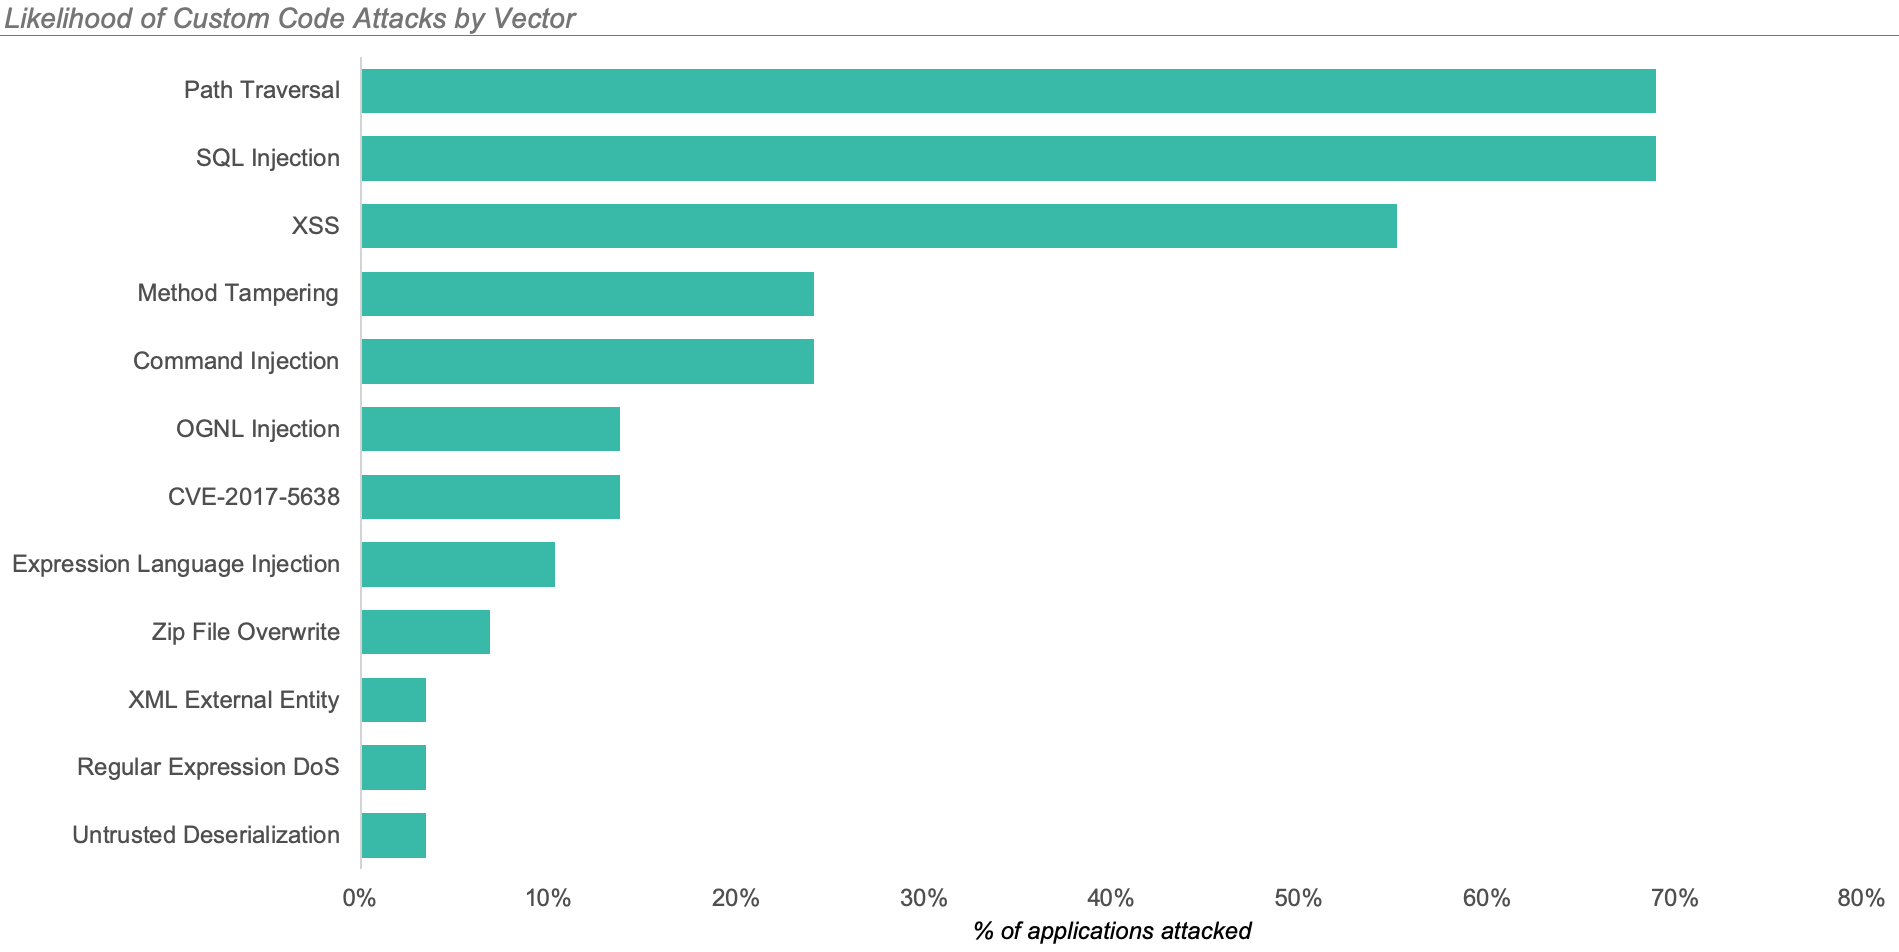 AppSec Intelligent Report graph showing likelihood of custom code attacks by vector